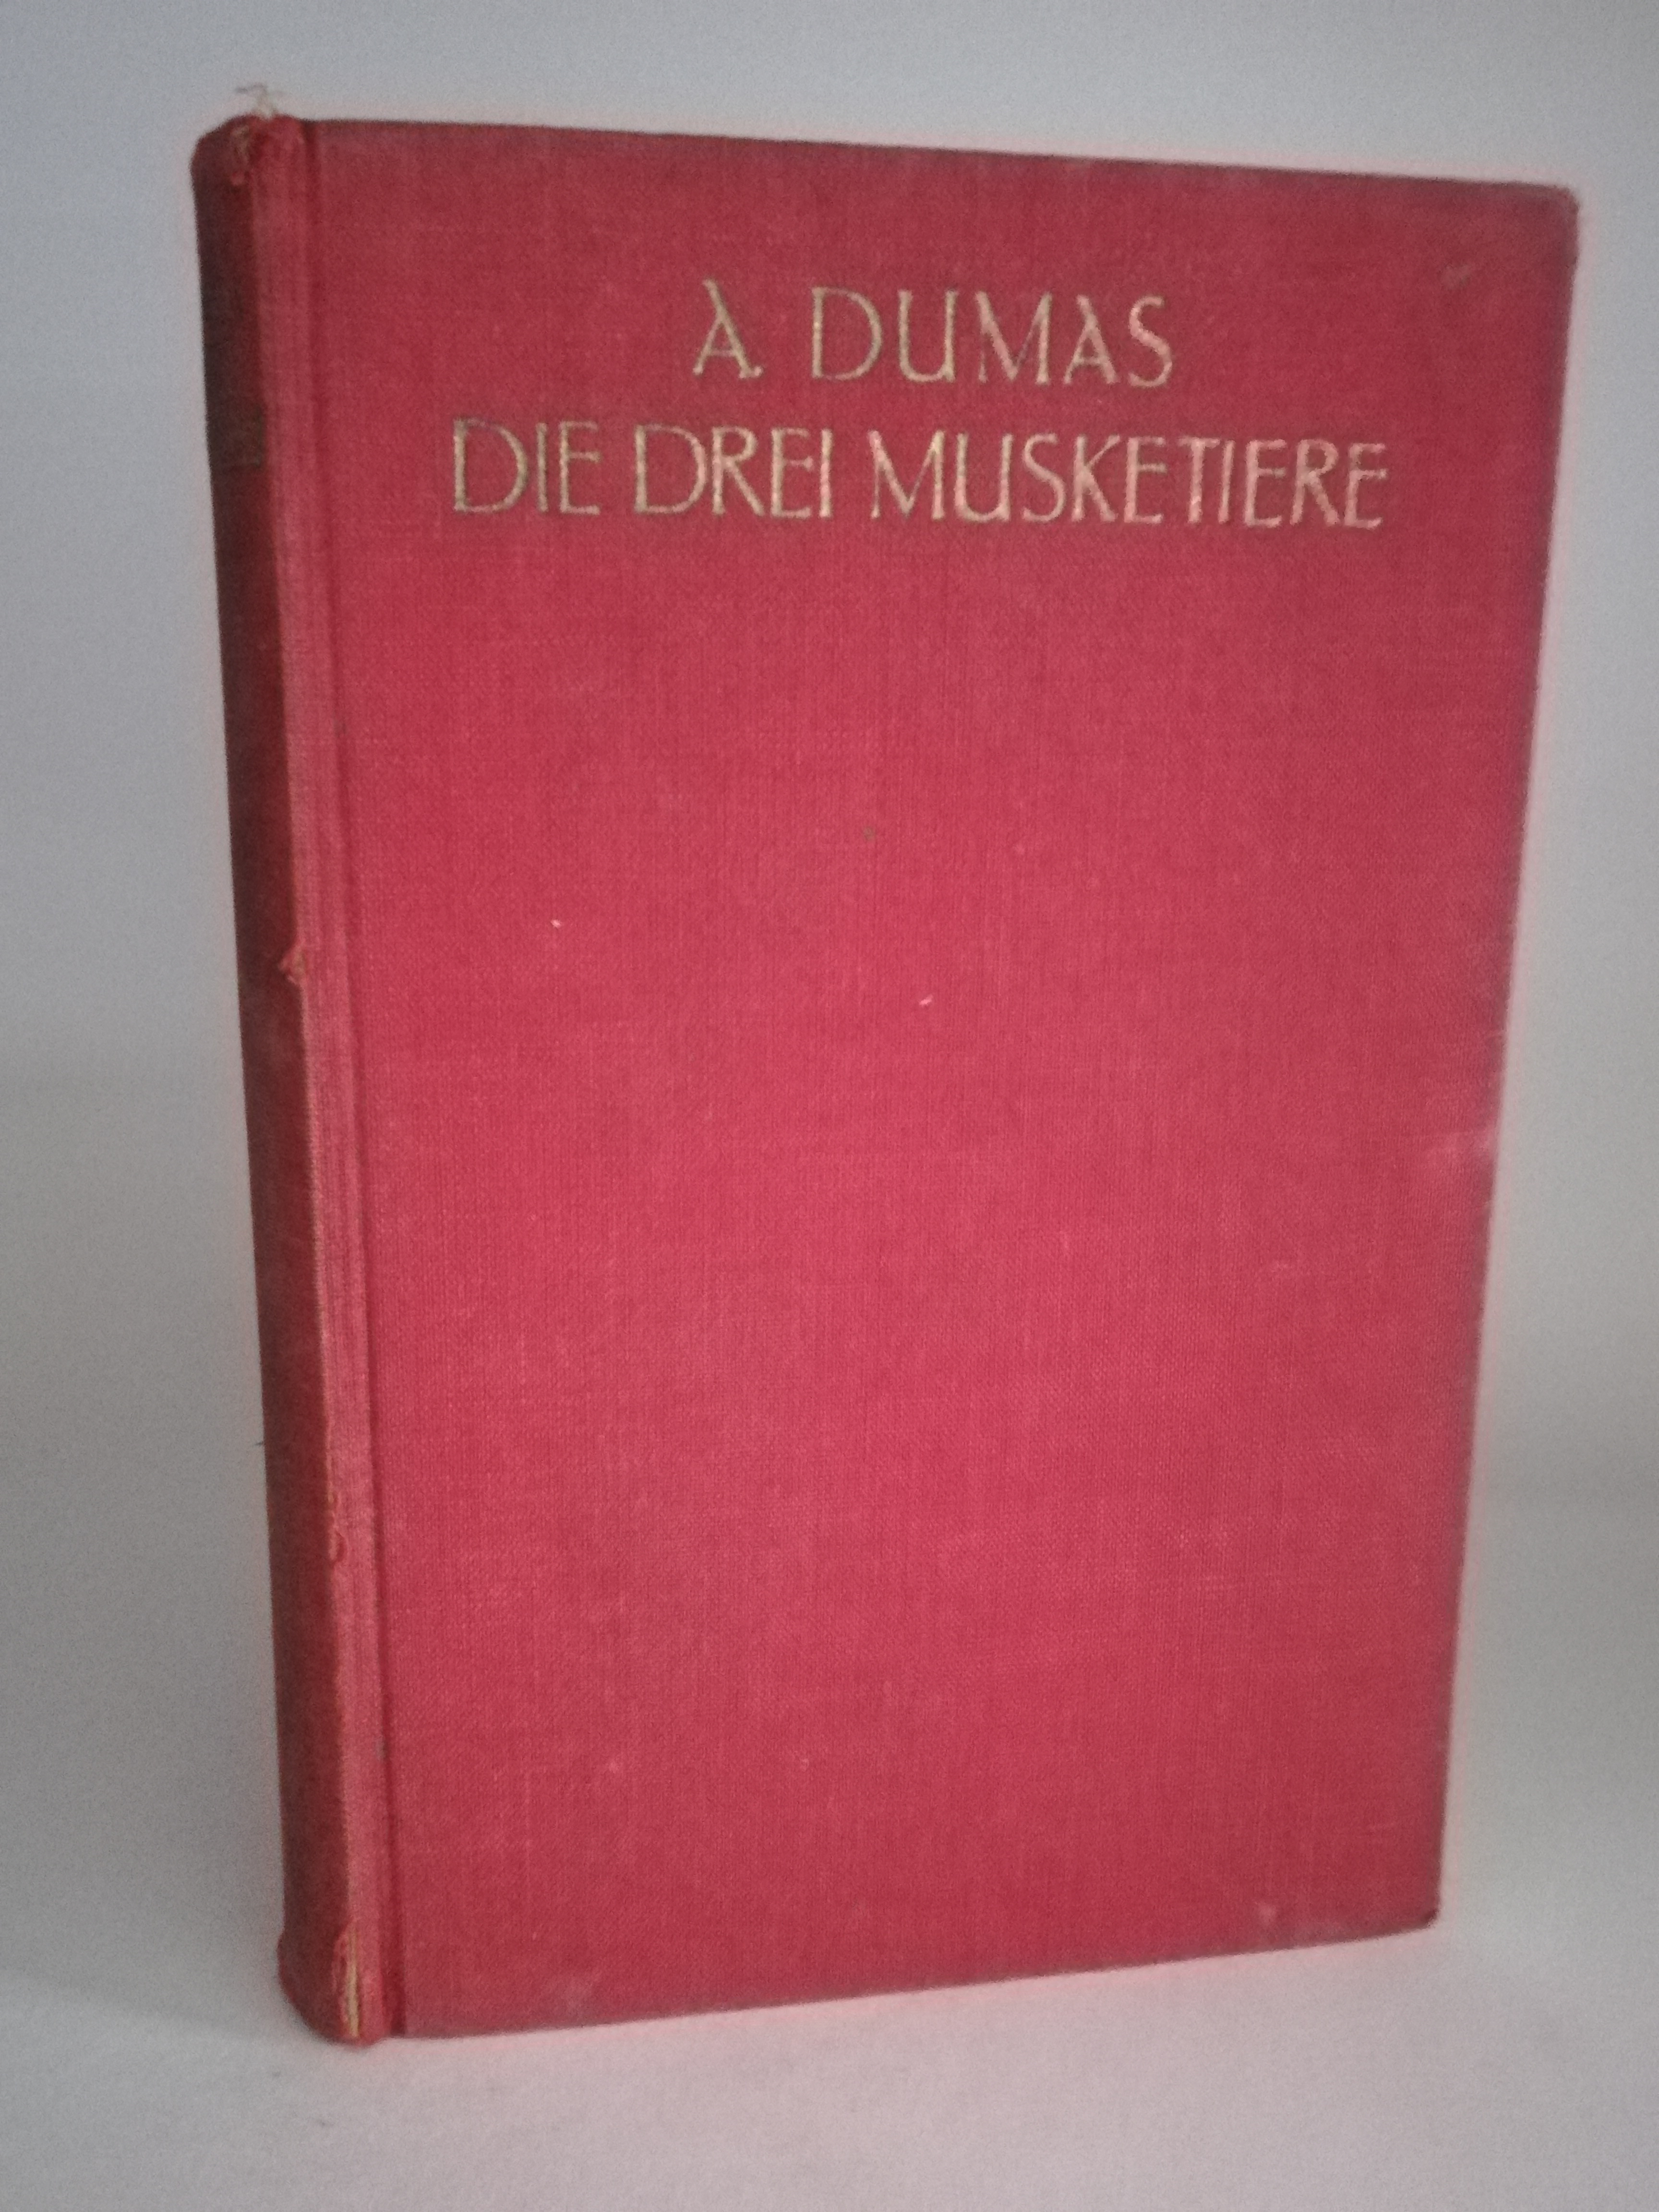 Alexandre Dumas  DIE DREI MUSKETIERE 